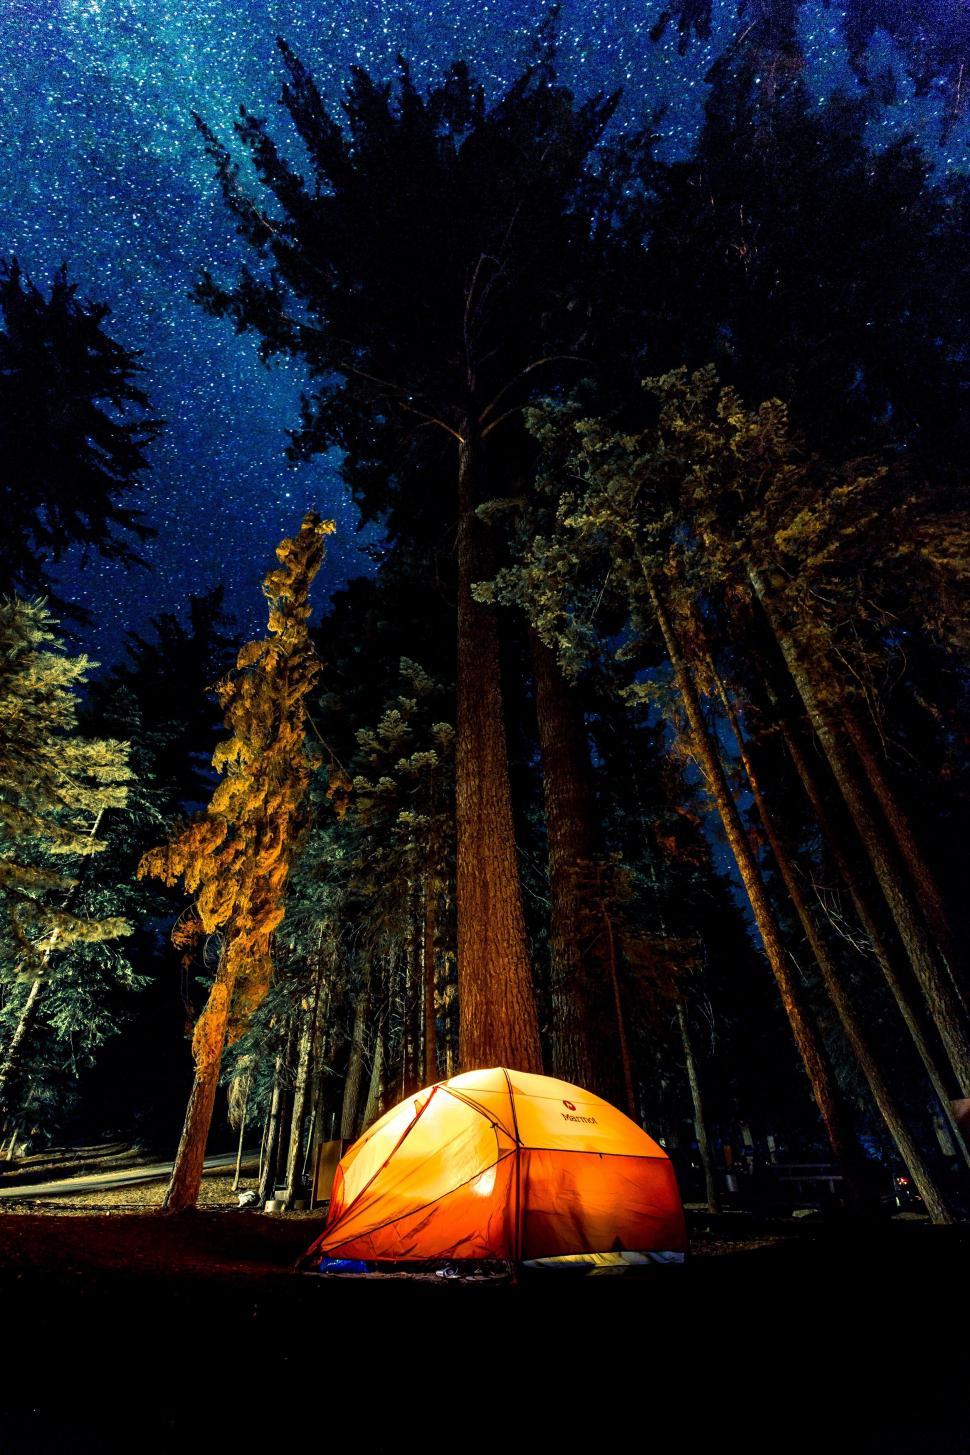 Free Image of Illuminated tent under starry night sky 